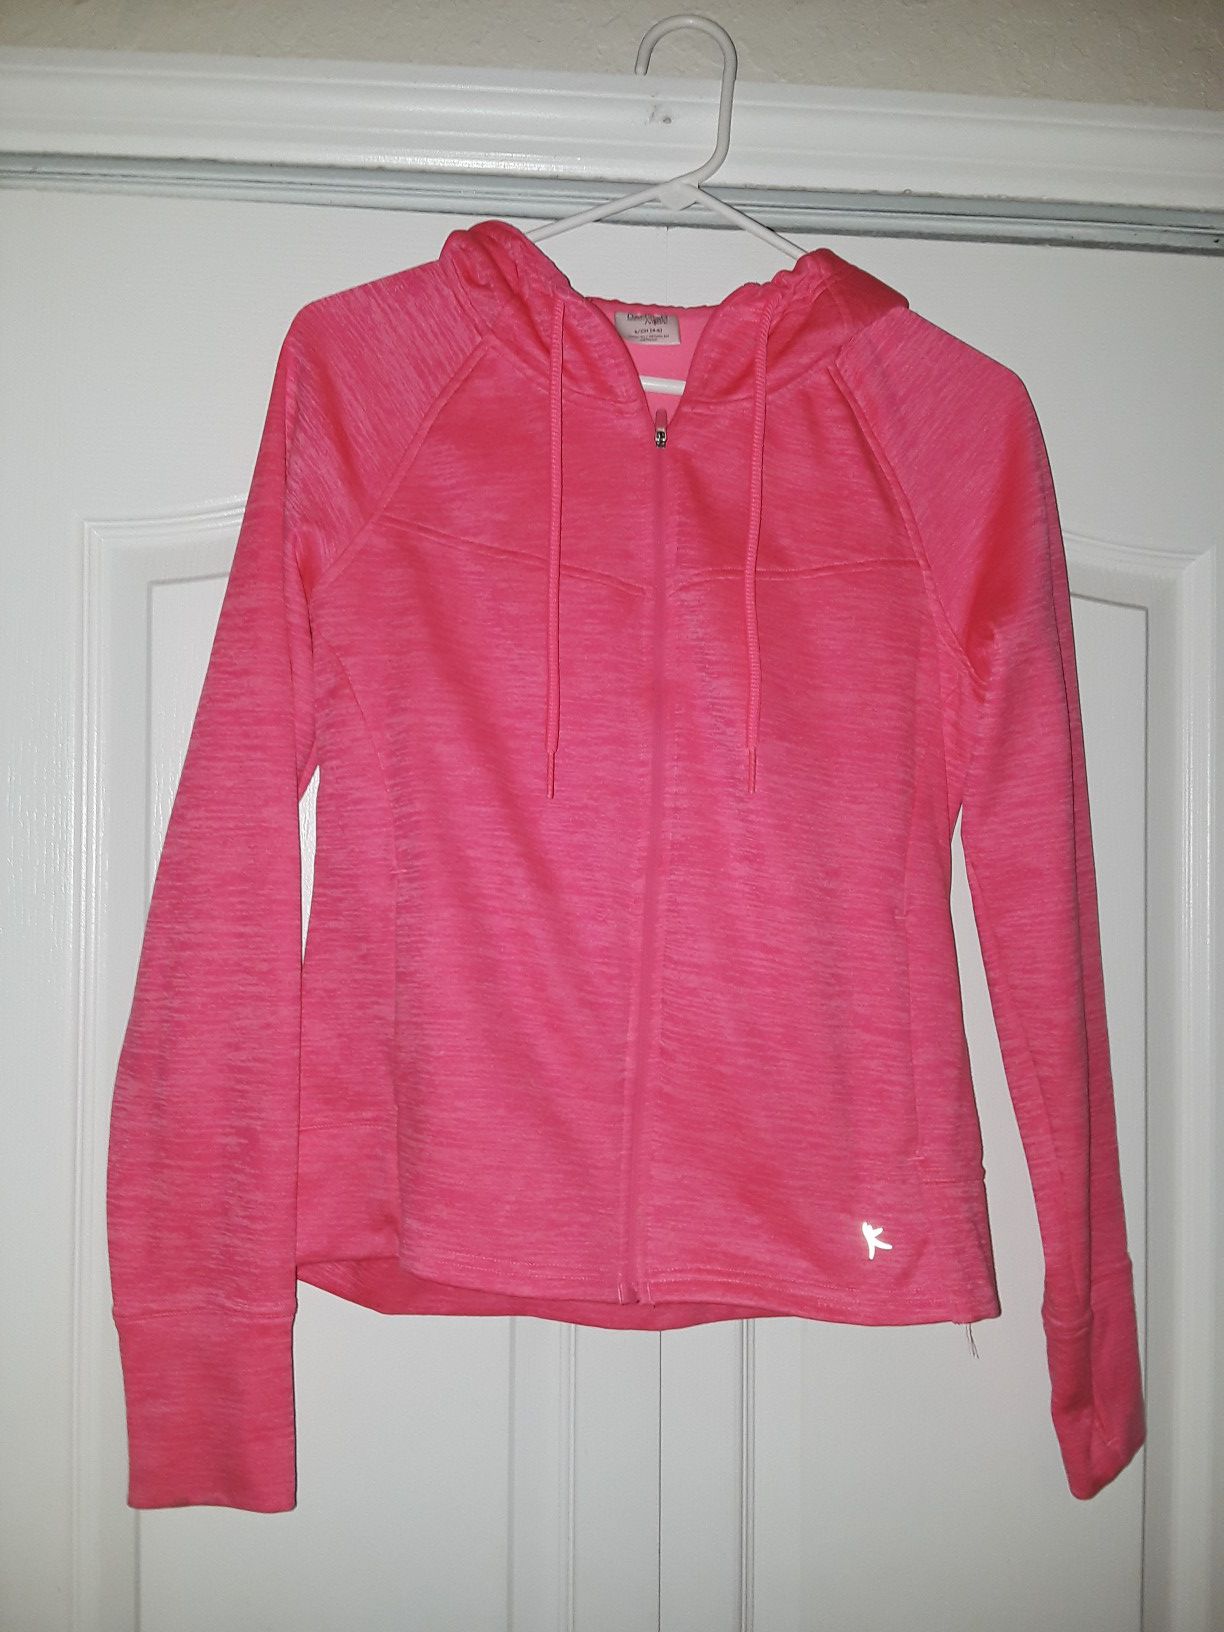 Hot pink Ladies danskin size small 4/6 zip-up active wear hoodie